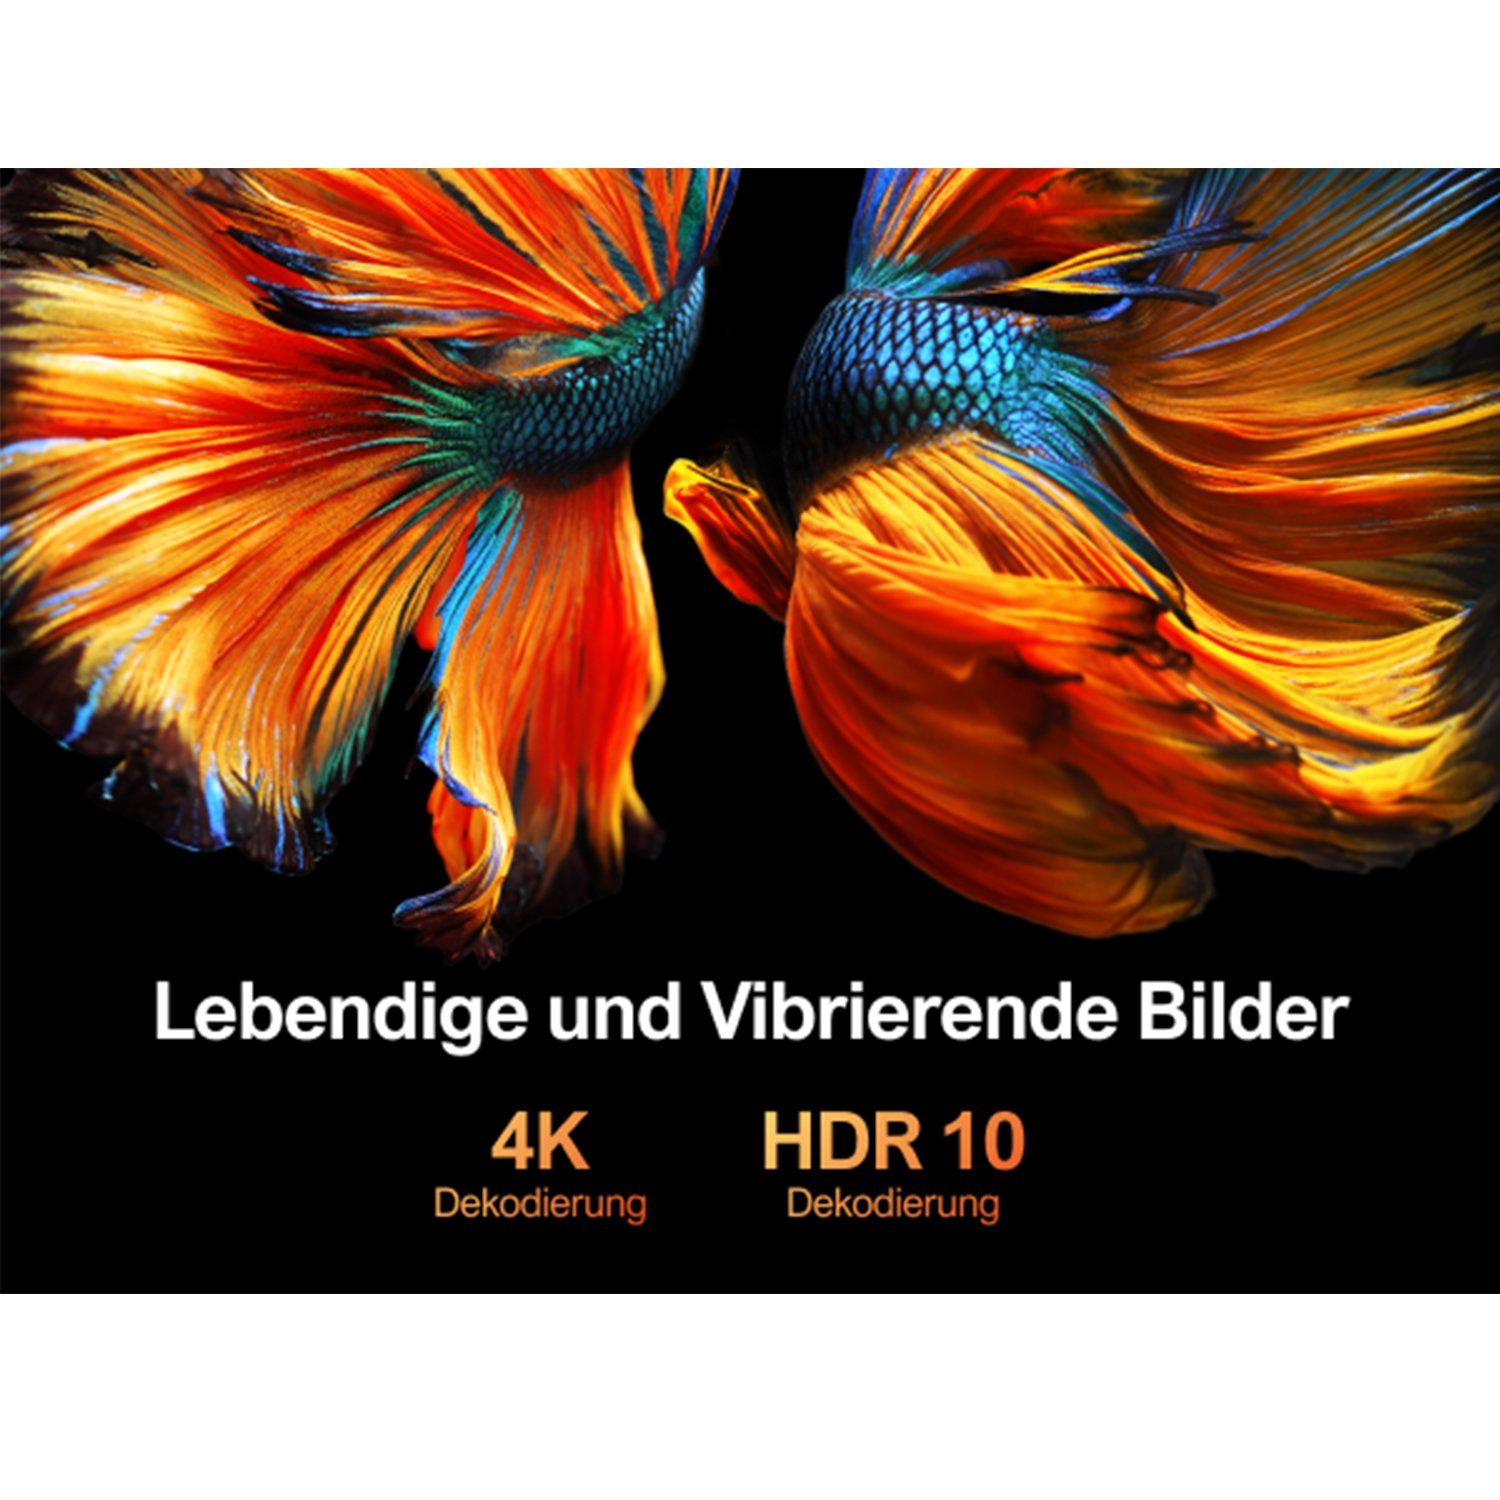 Full px, 1920 Native (21000 Full lm, 1080P Autofokus&6D-Autotrapezkorrektur) Ultimea x grau 15000:1, HD 1080 HD,4K-Decodierung&HDR10, Beamer